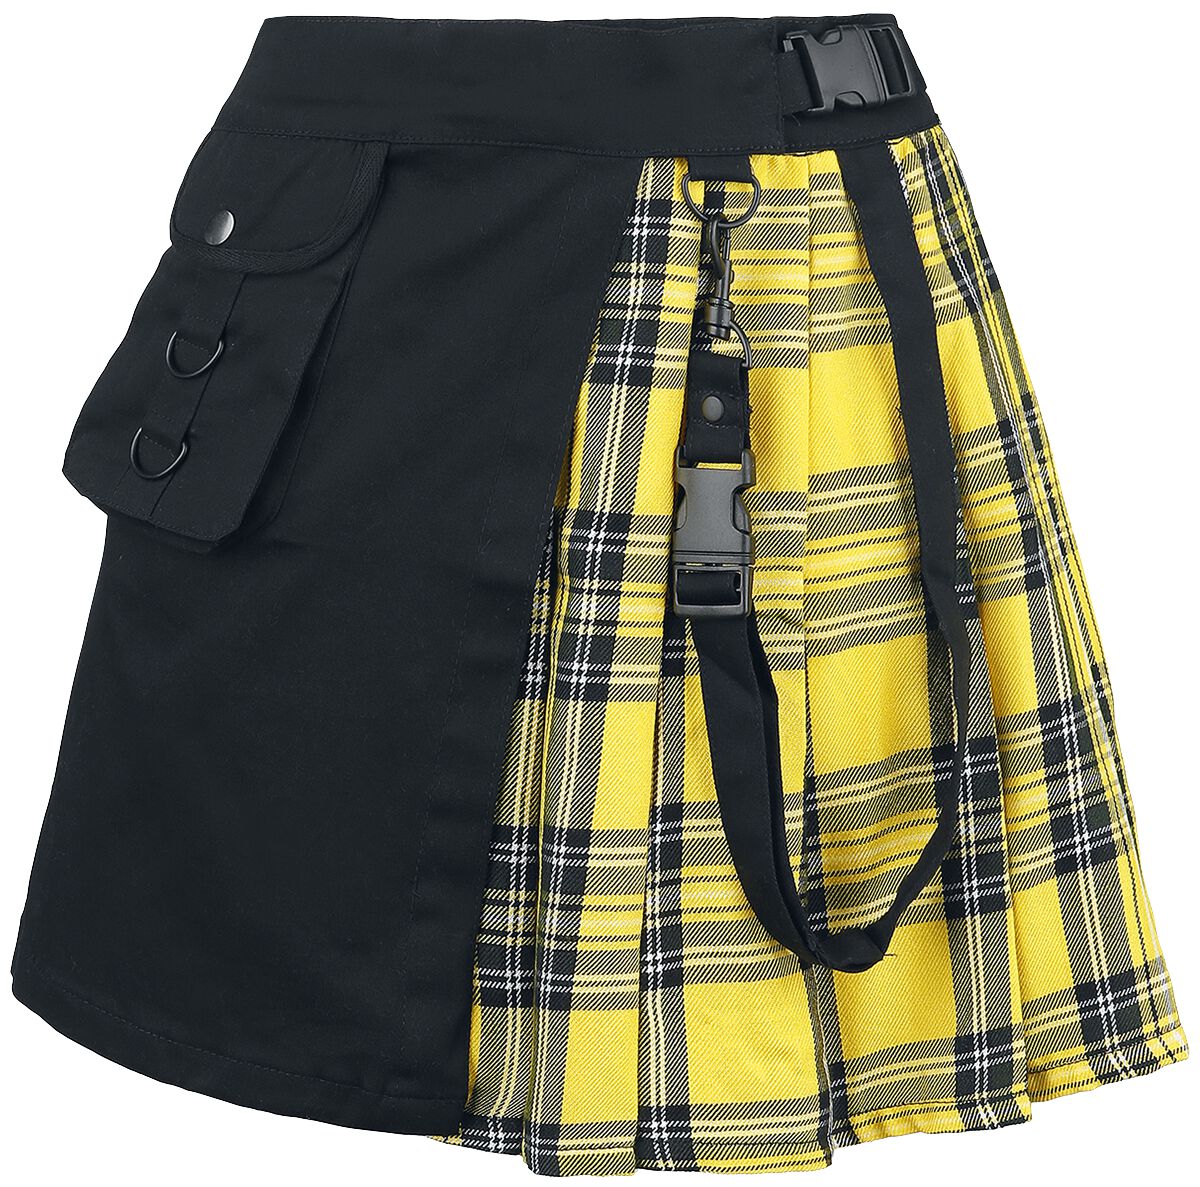 Chemical Black Infinity Skirt Kurzer Rock schwarz gelb in S